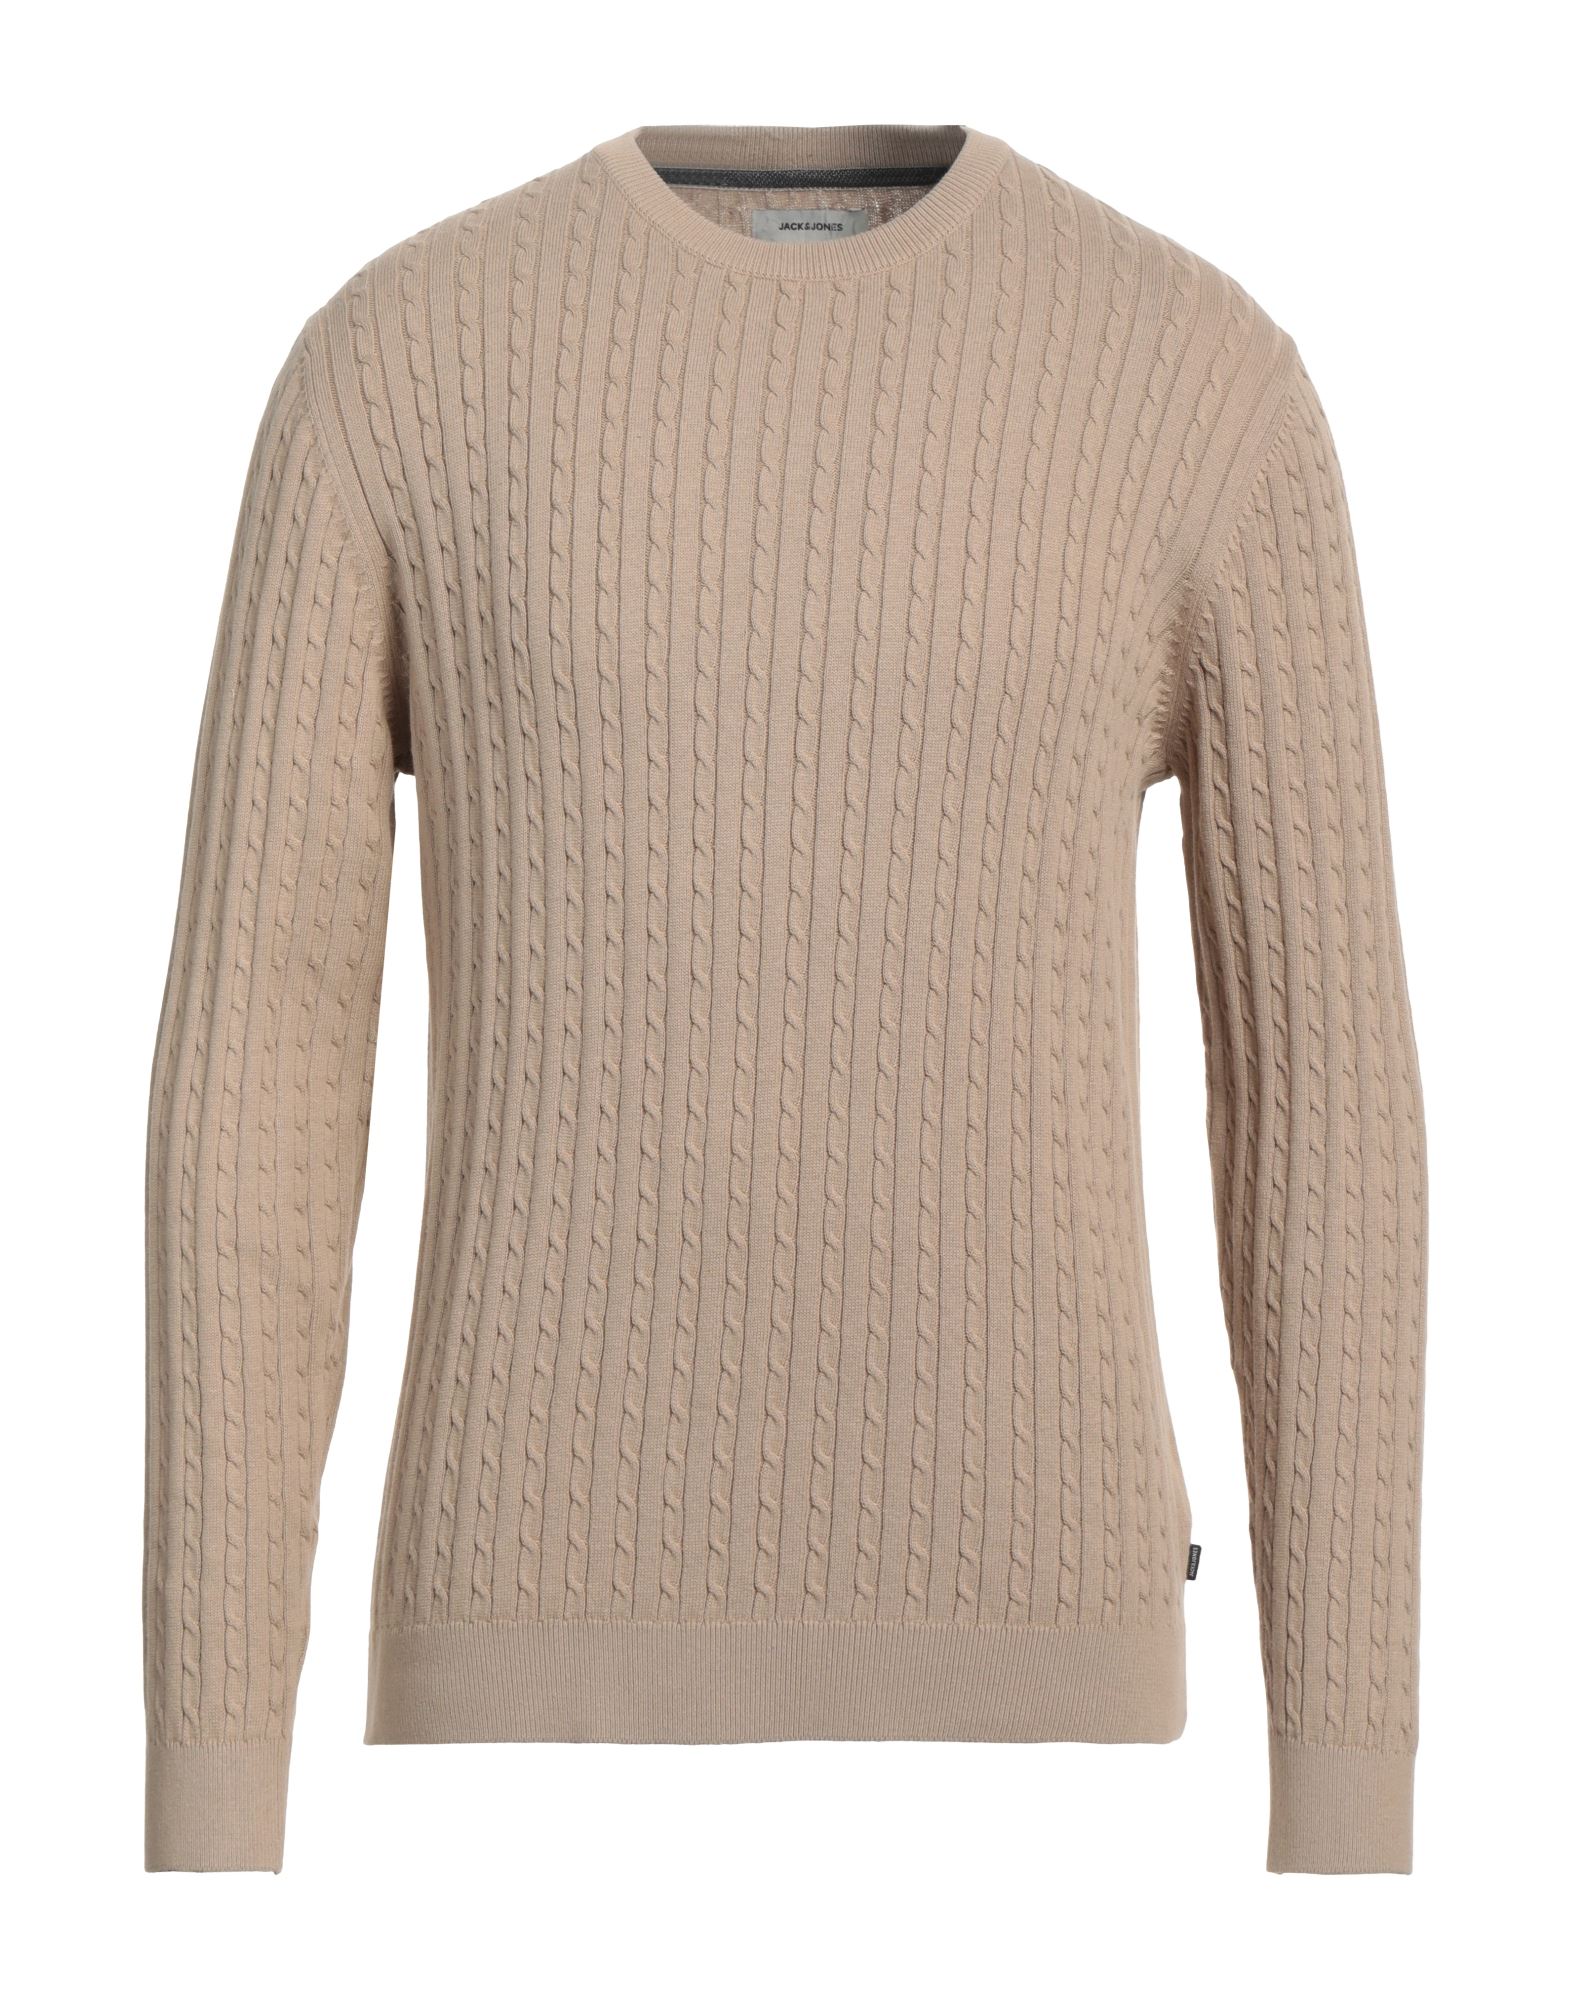 Jack & Jones Man Sweater Beige Size Xxl Cotton